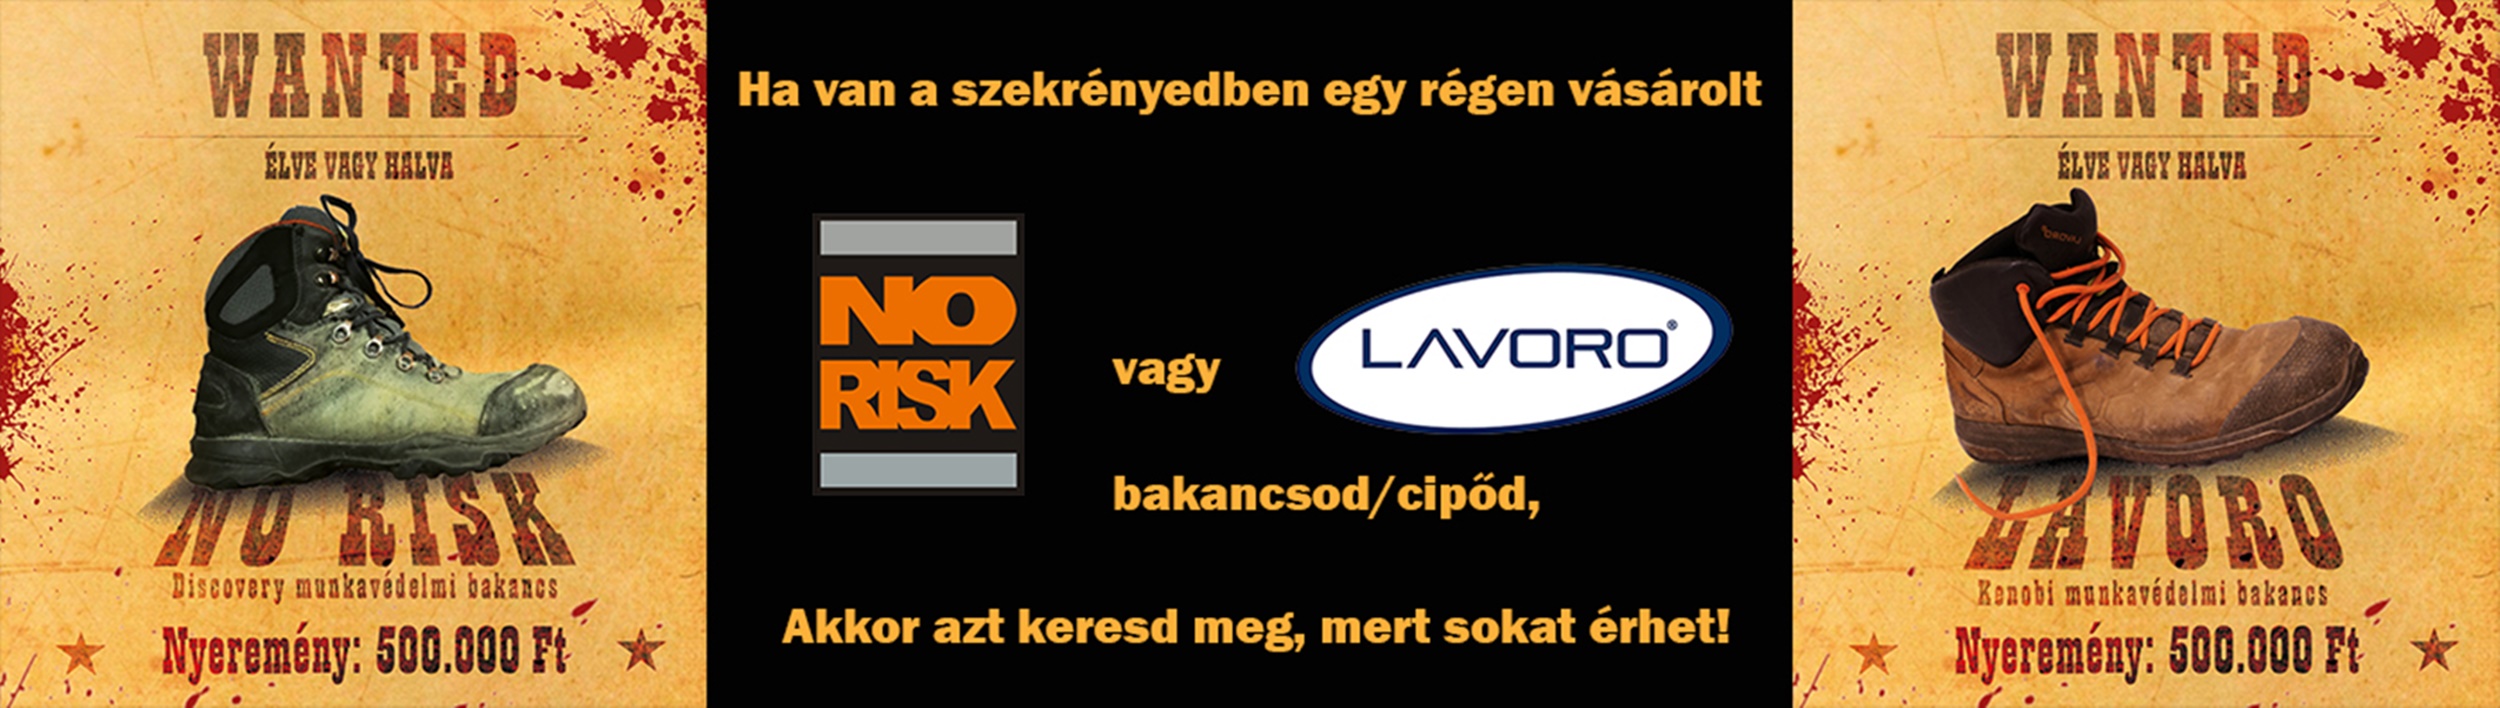 lavoro-norisk-munkavedelmi-cipo-bakancs-vedofelszerelesek-slide-1